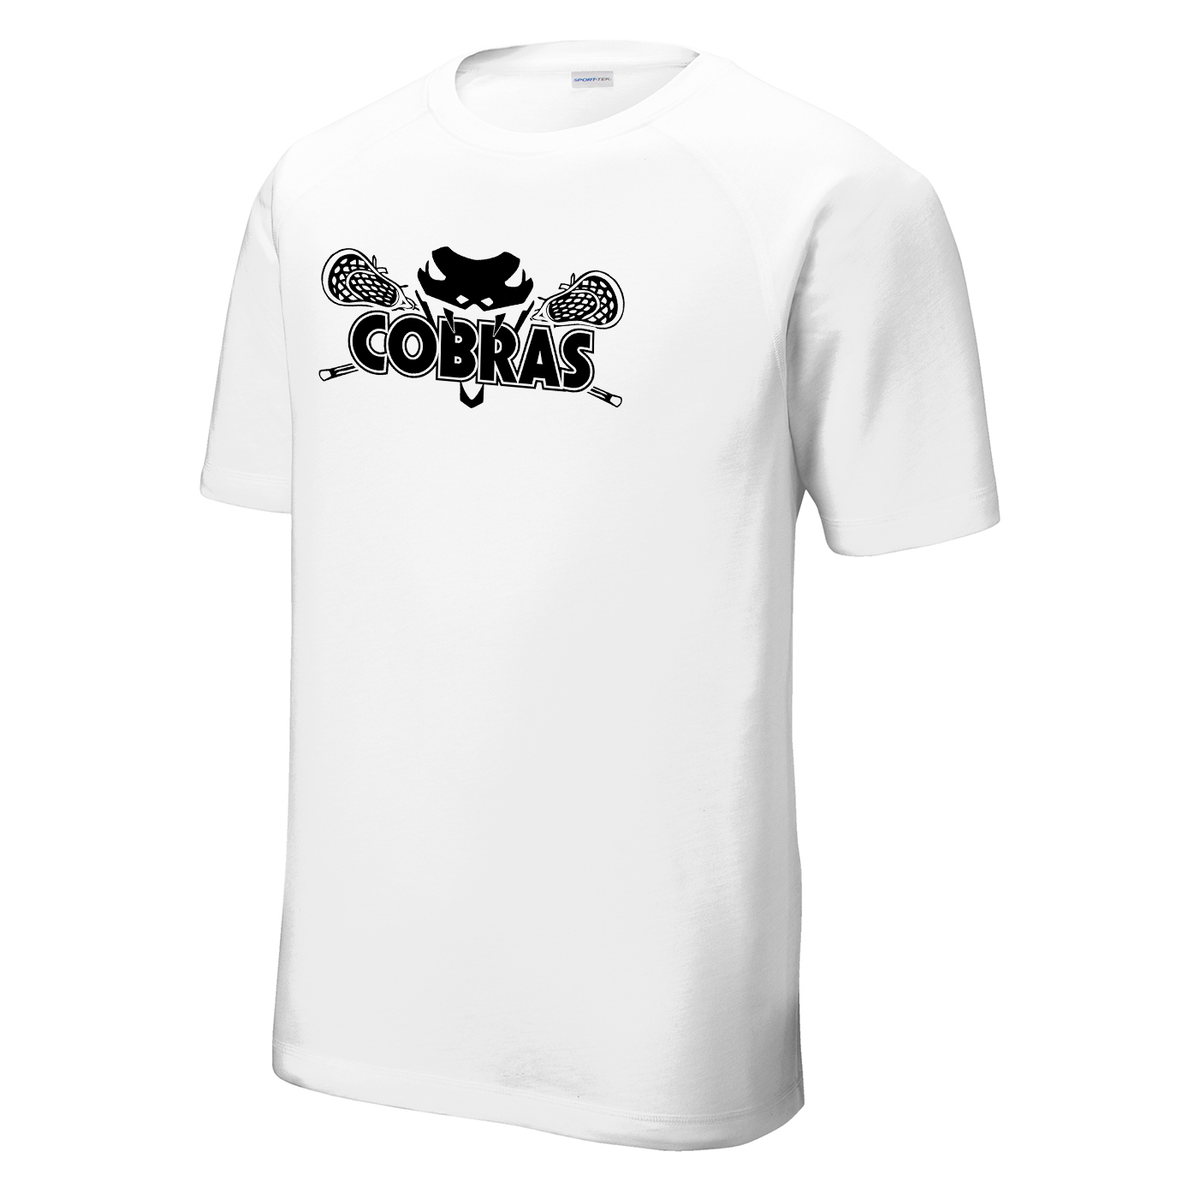 KC Cobras Lacrosse Raglan CottonTouch Tee